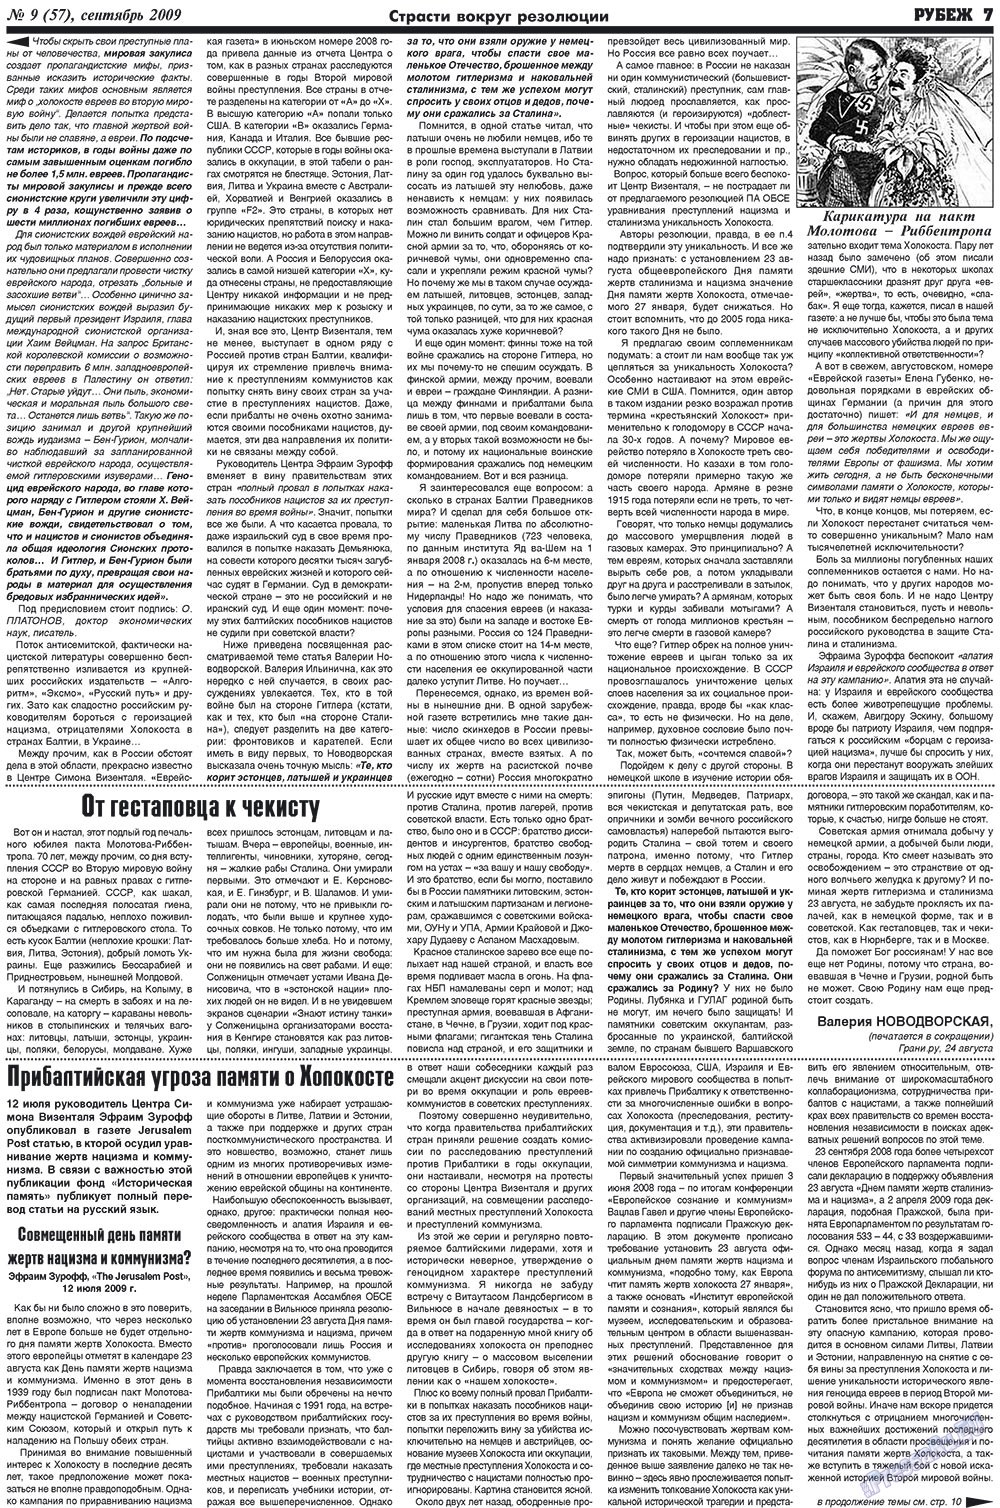 Рубеж, газета. 2009 №9 стр.7